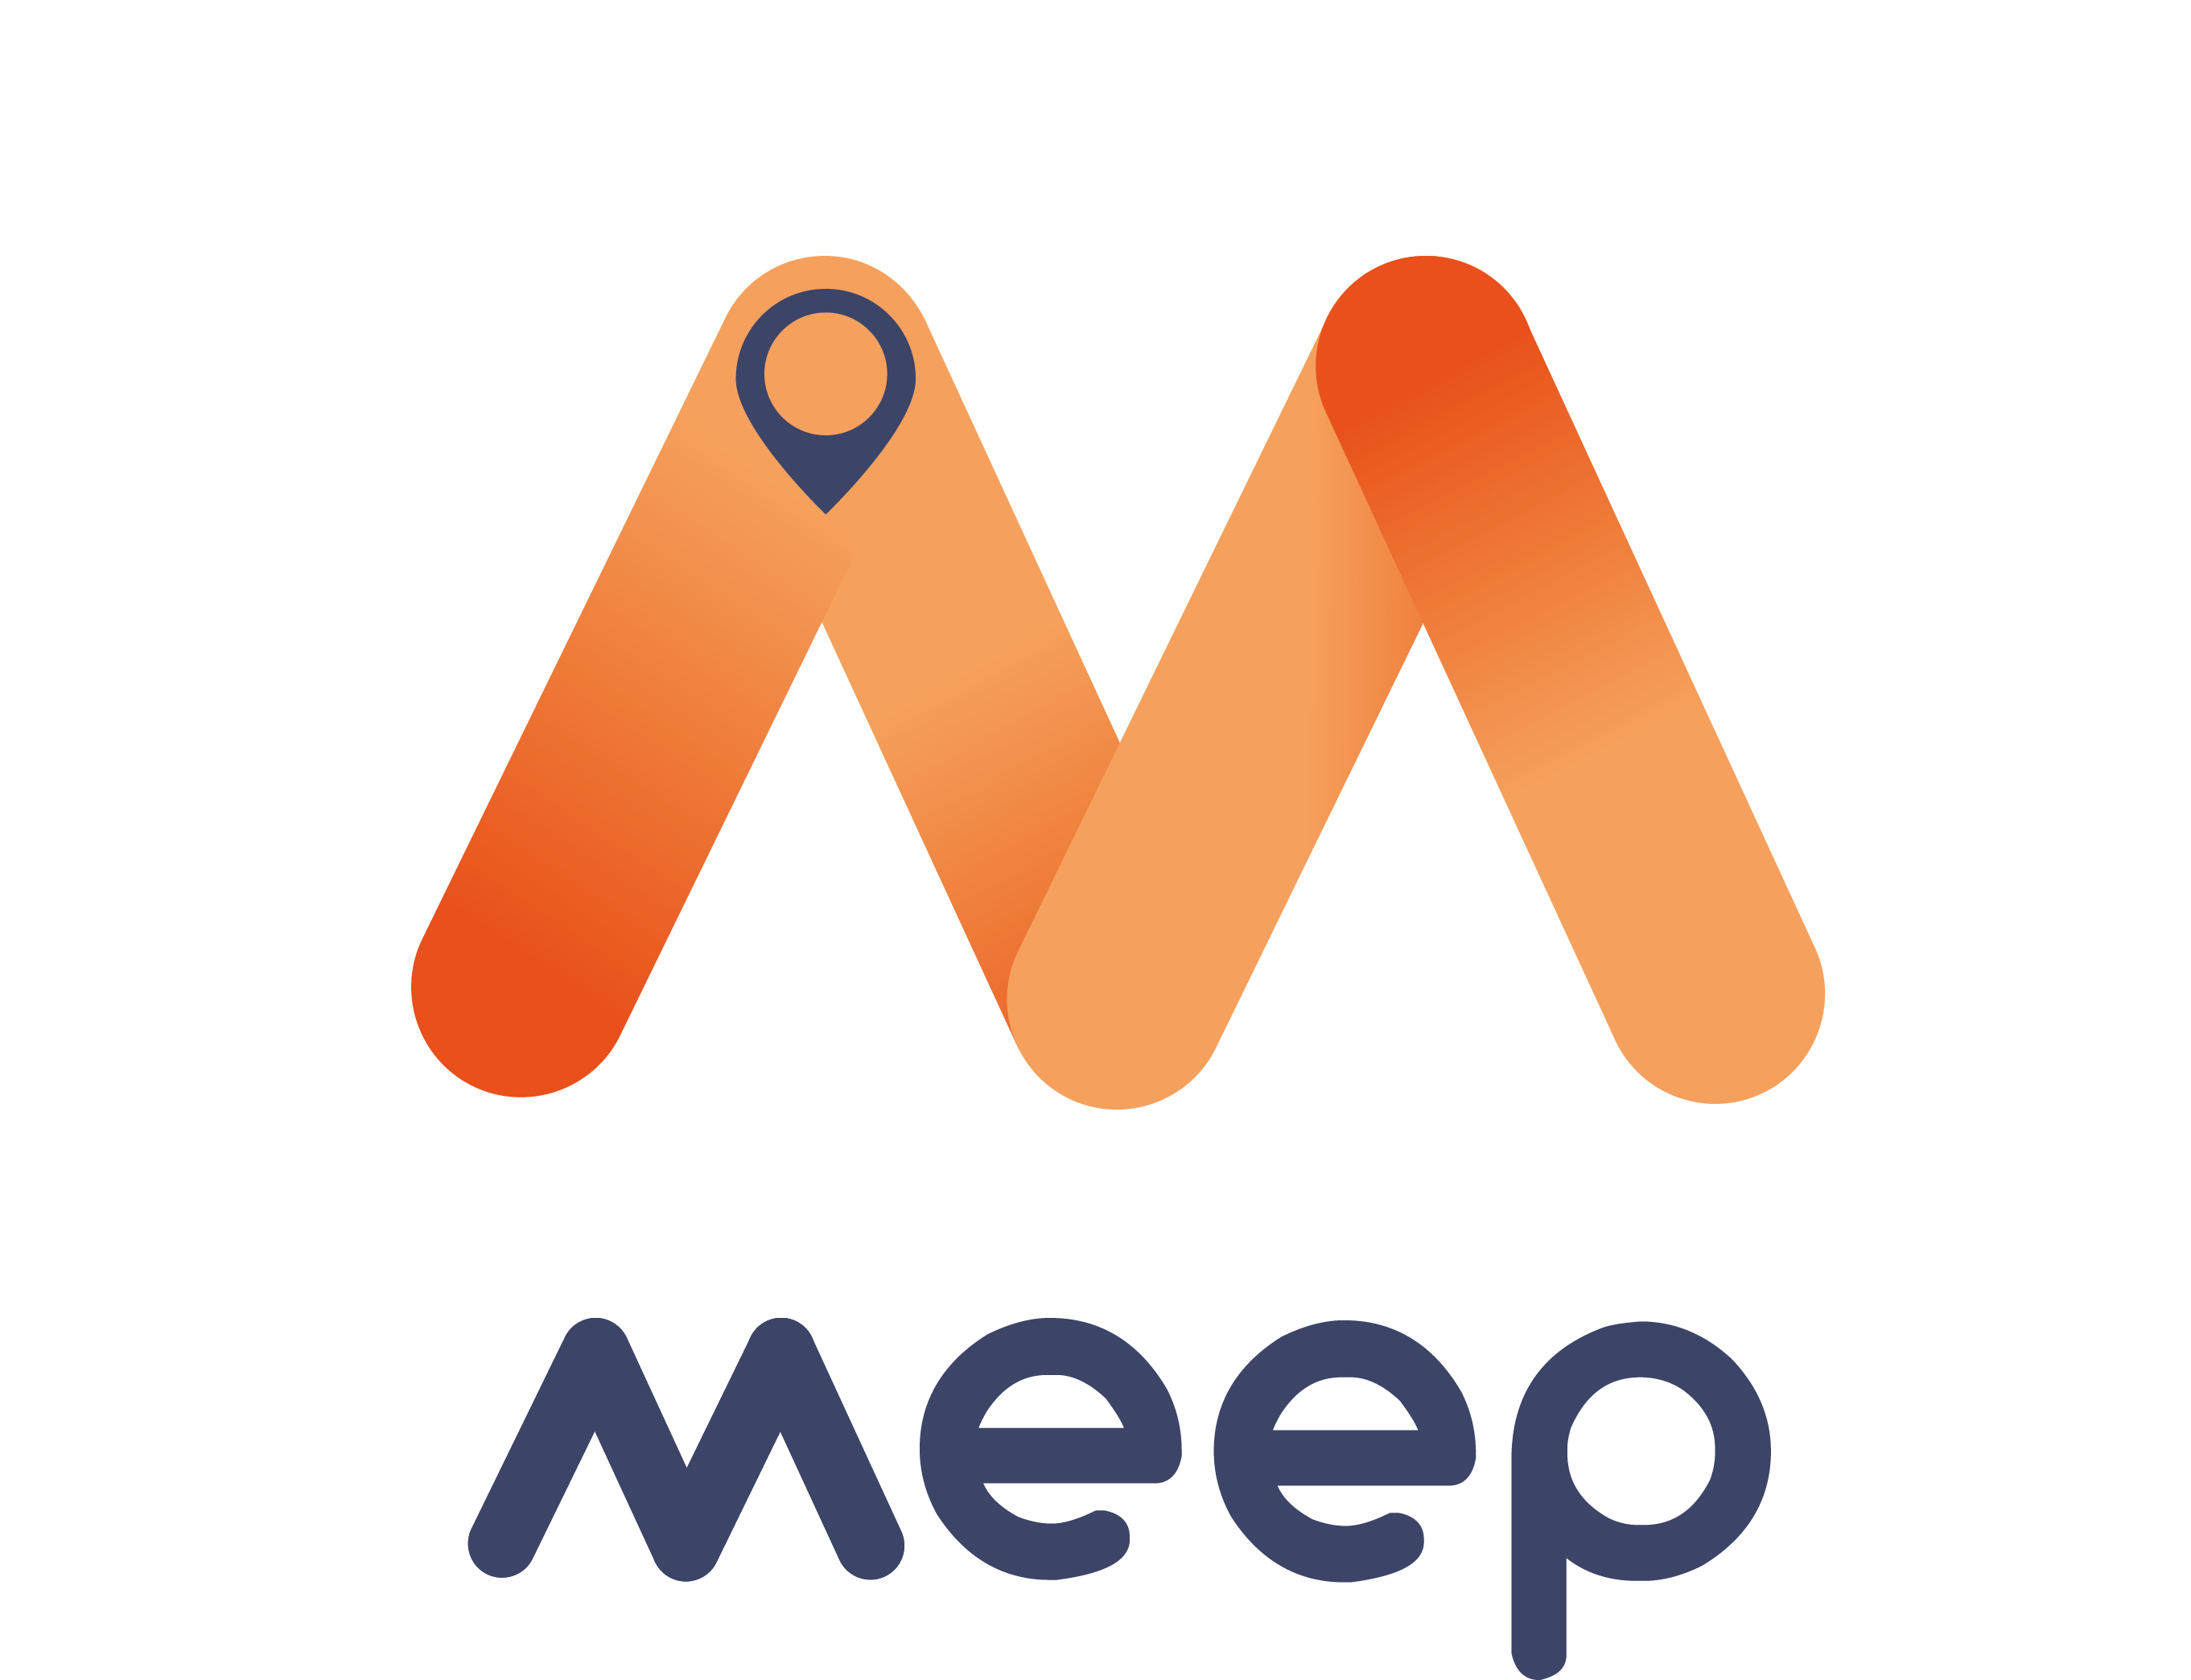 Meep logo